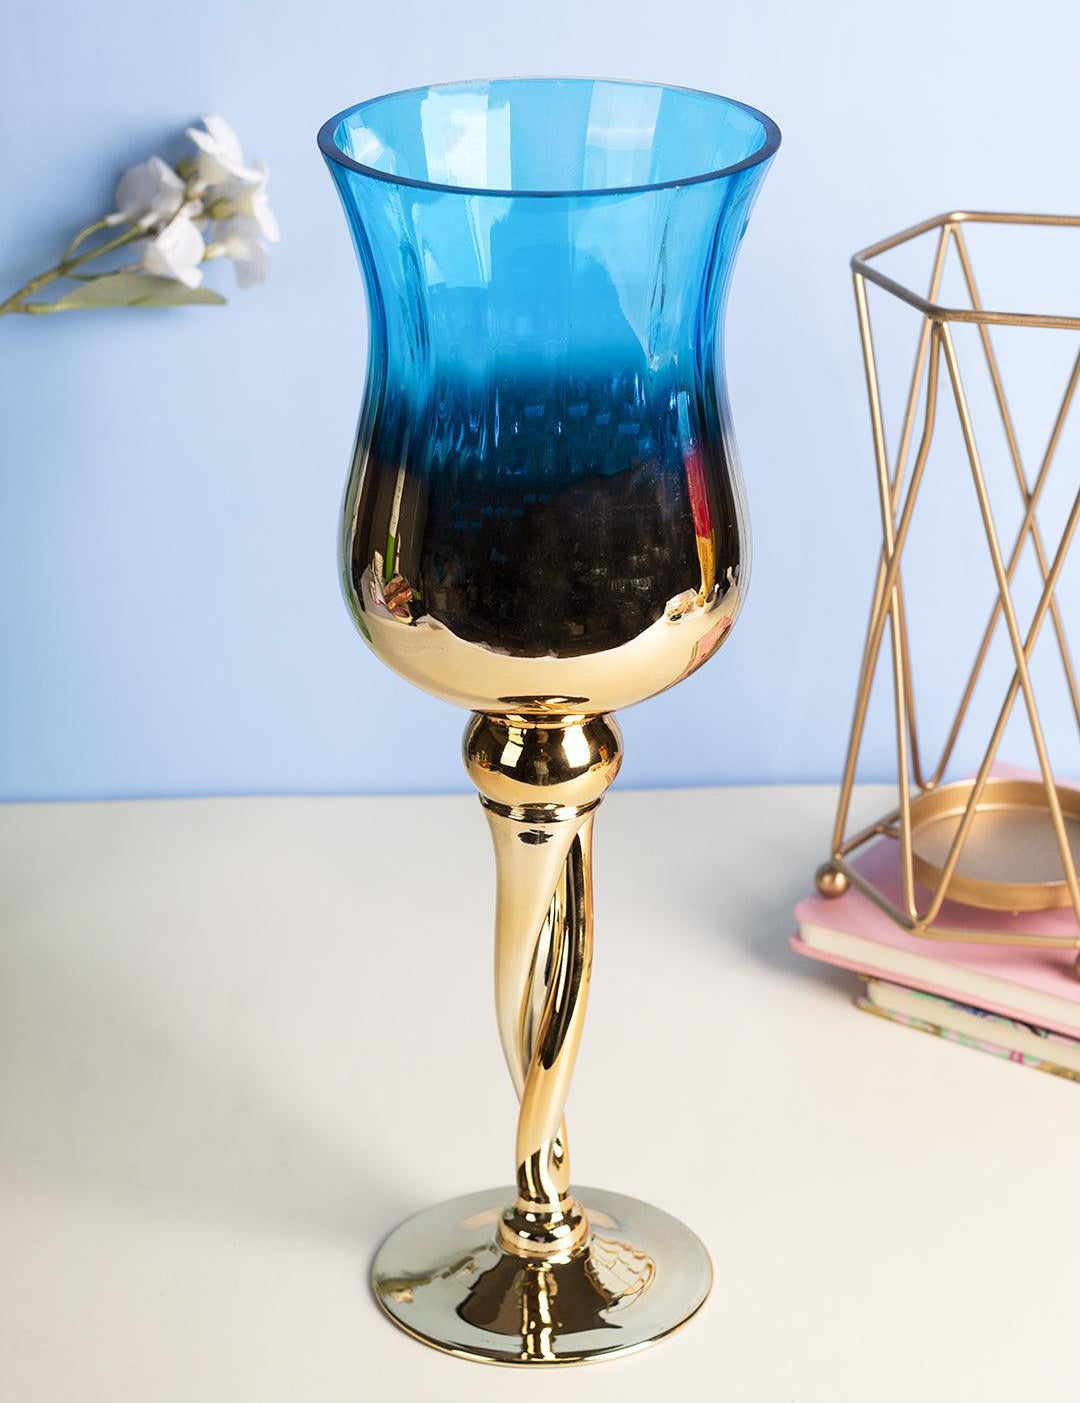 Decorative Skyblue Tined Glass Tealight Candlestick Holder - MARKET 99